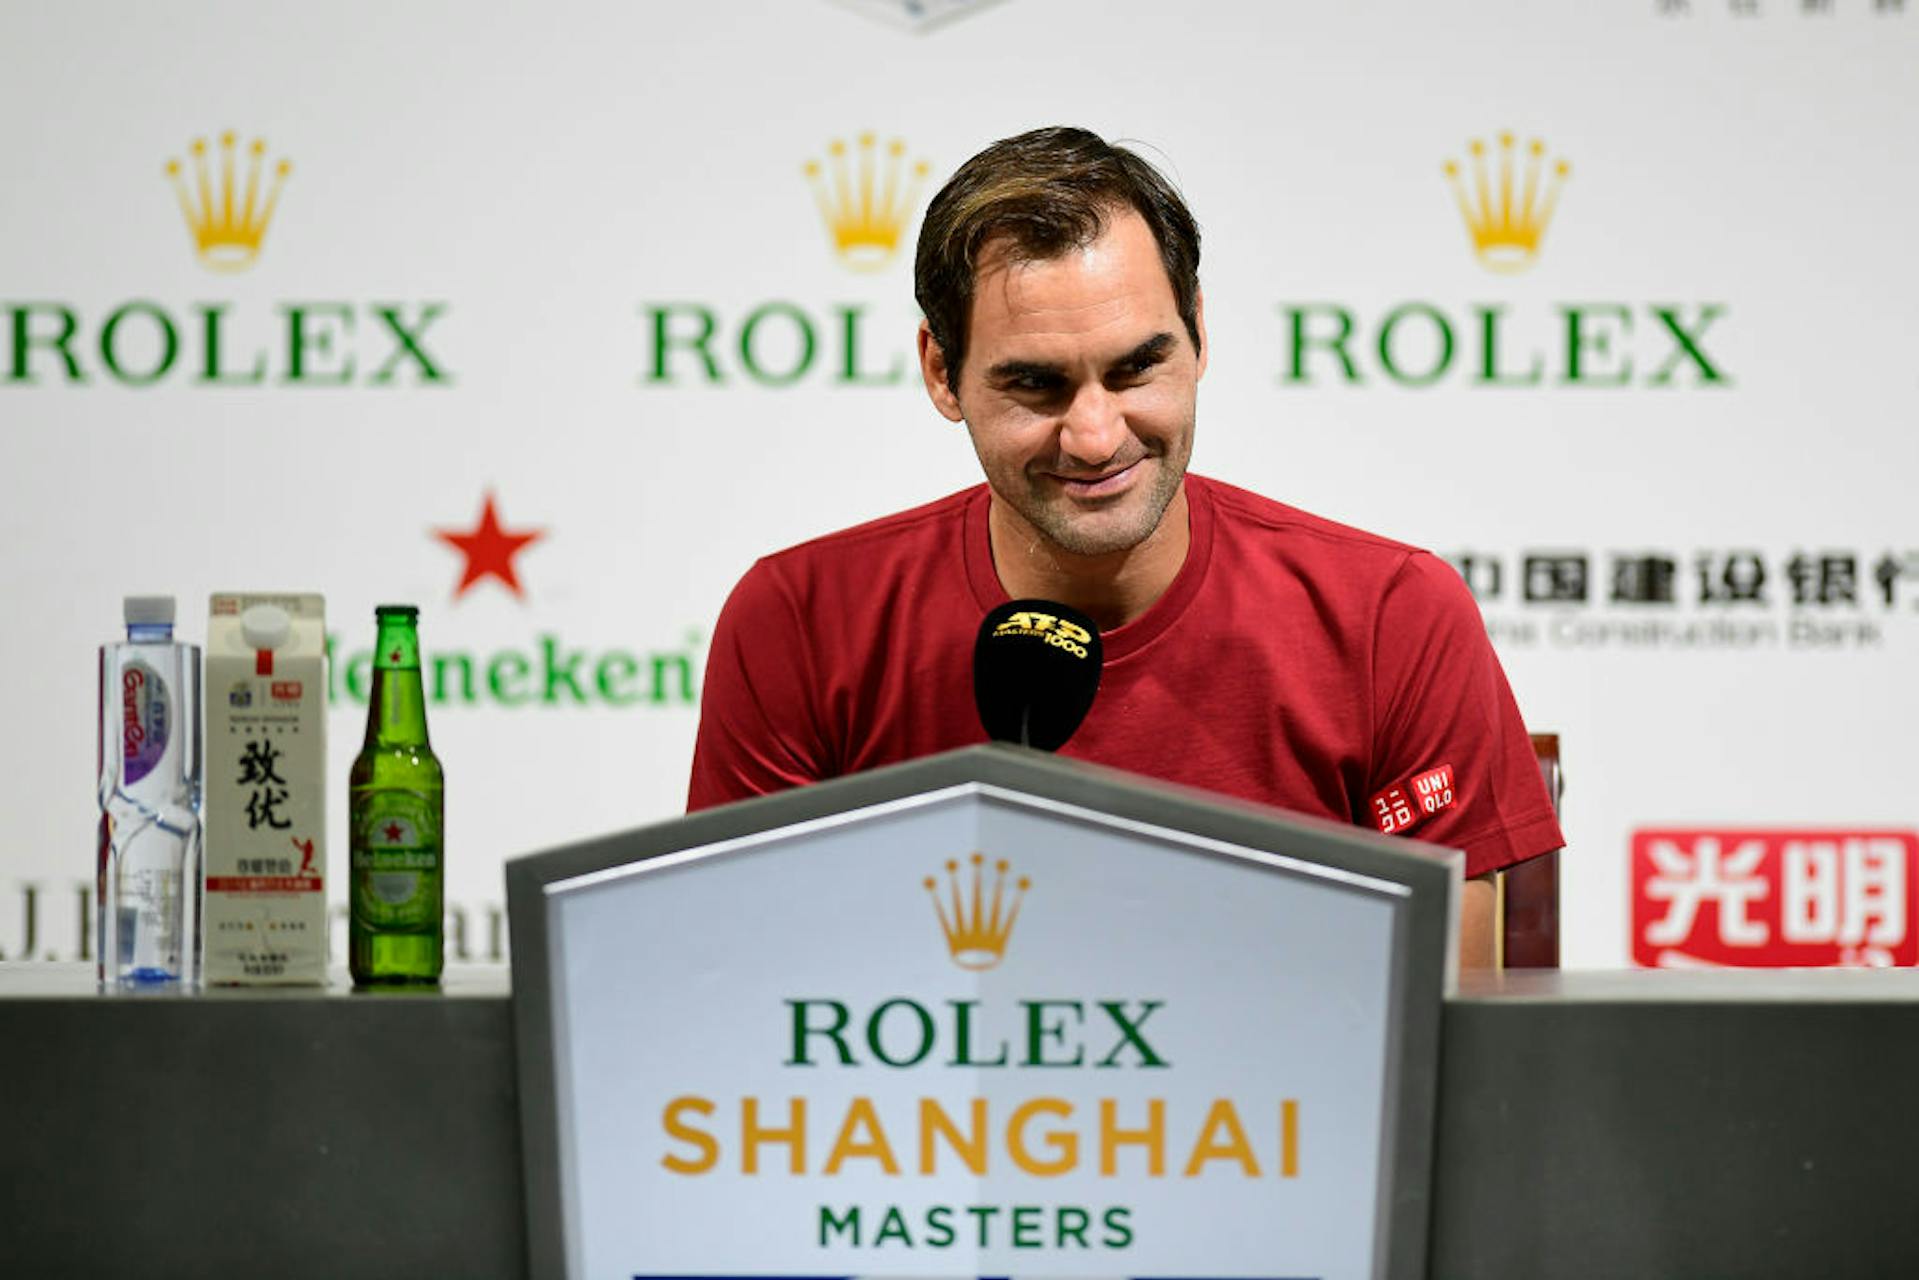 Rolex Shanghai Masters Prize Money